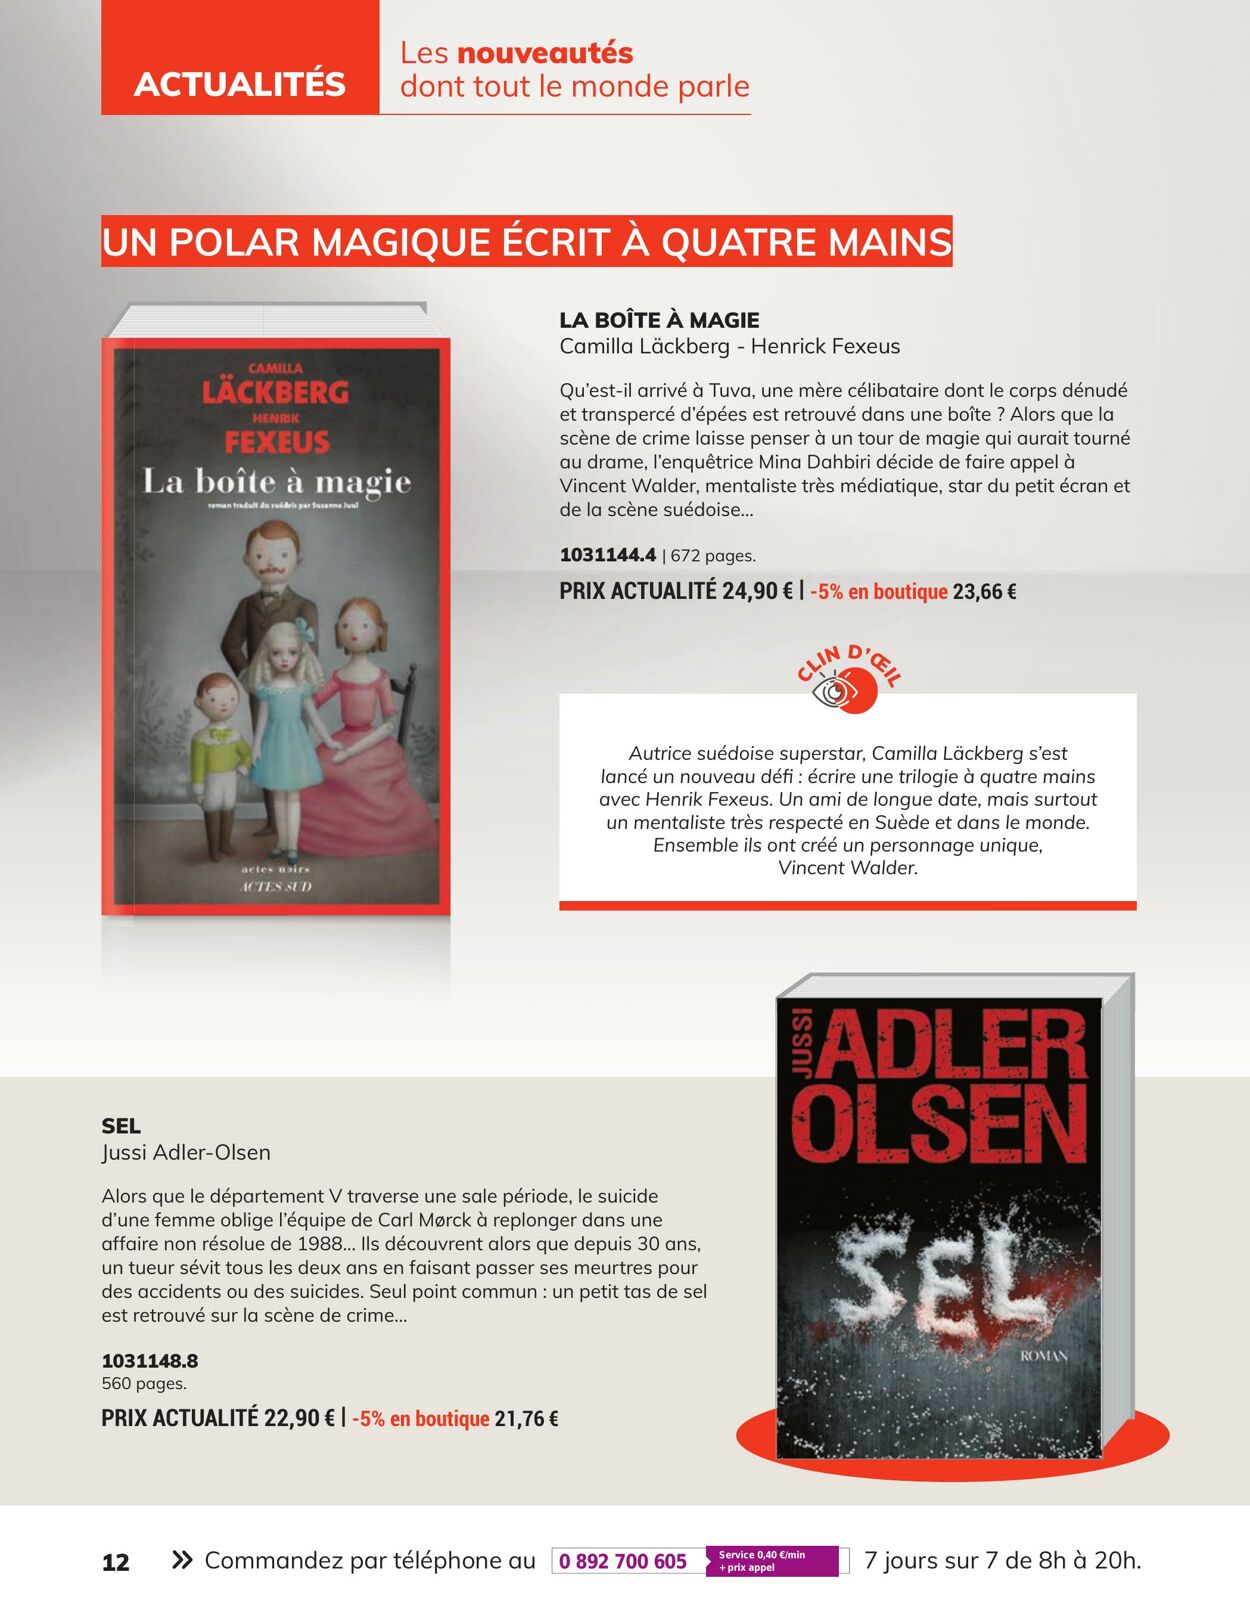 Catalogue France Loisirs 21.06.2022 - 24.08.2022